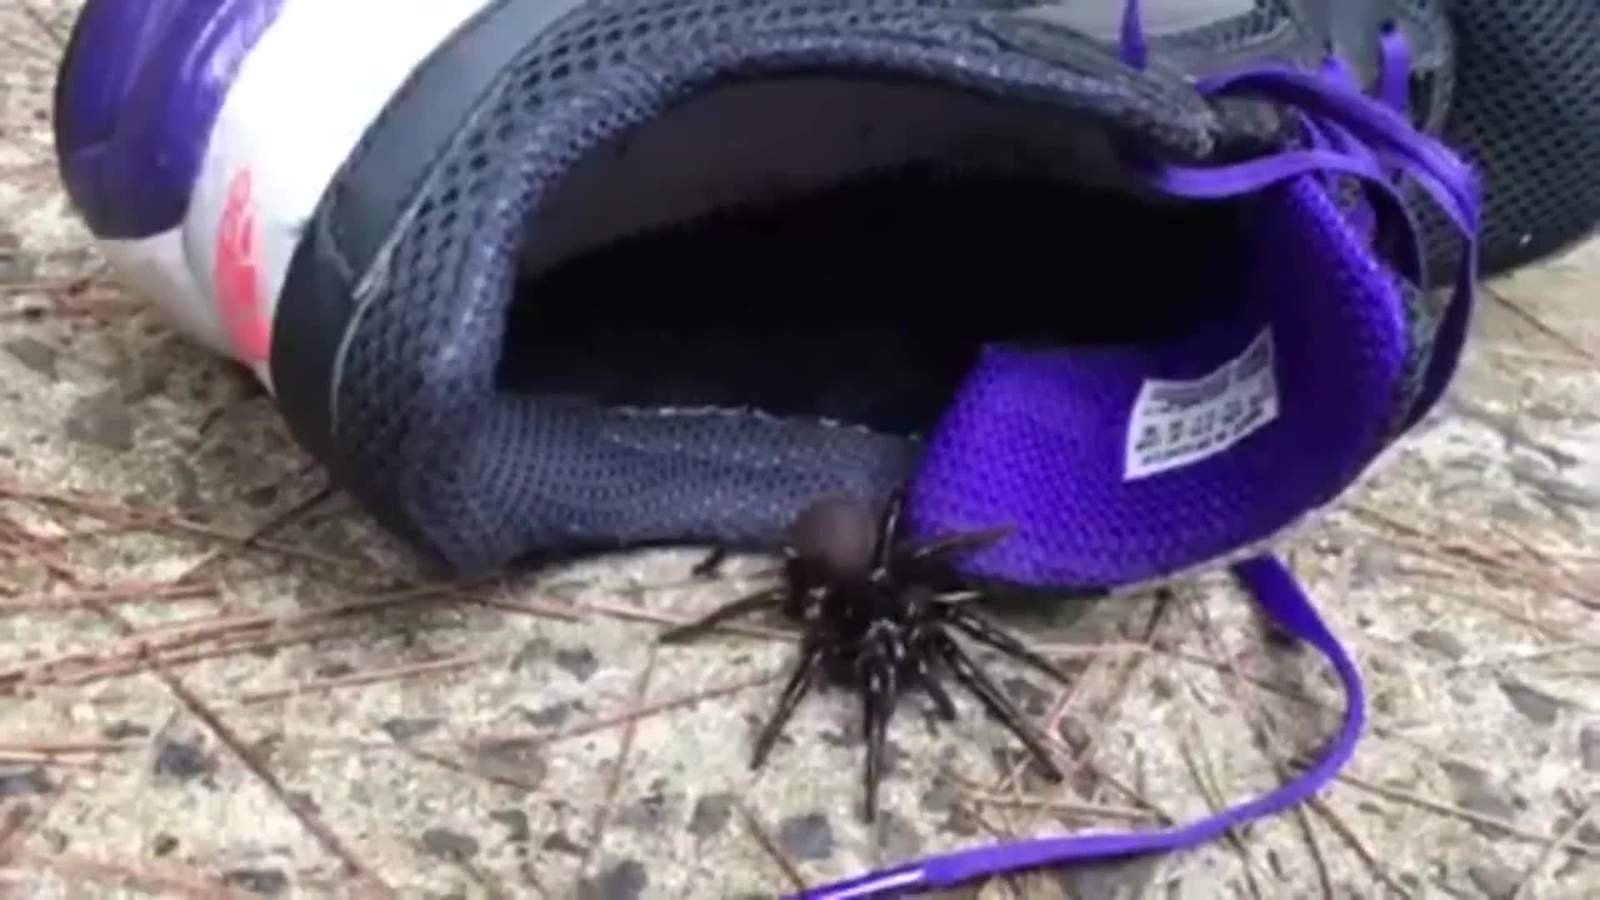 Australia experiencing spider, snake invasion amid floods